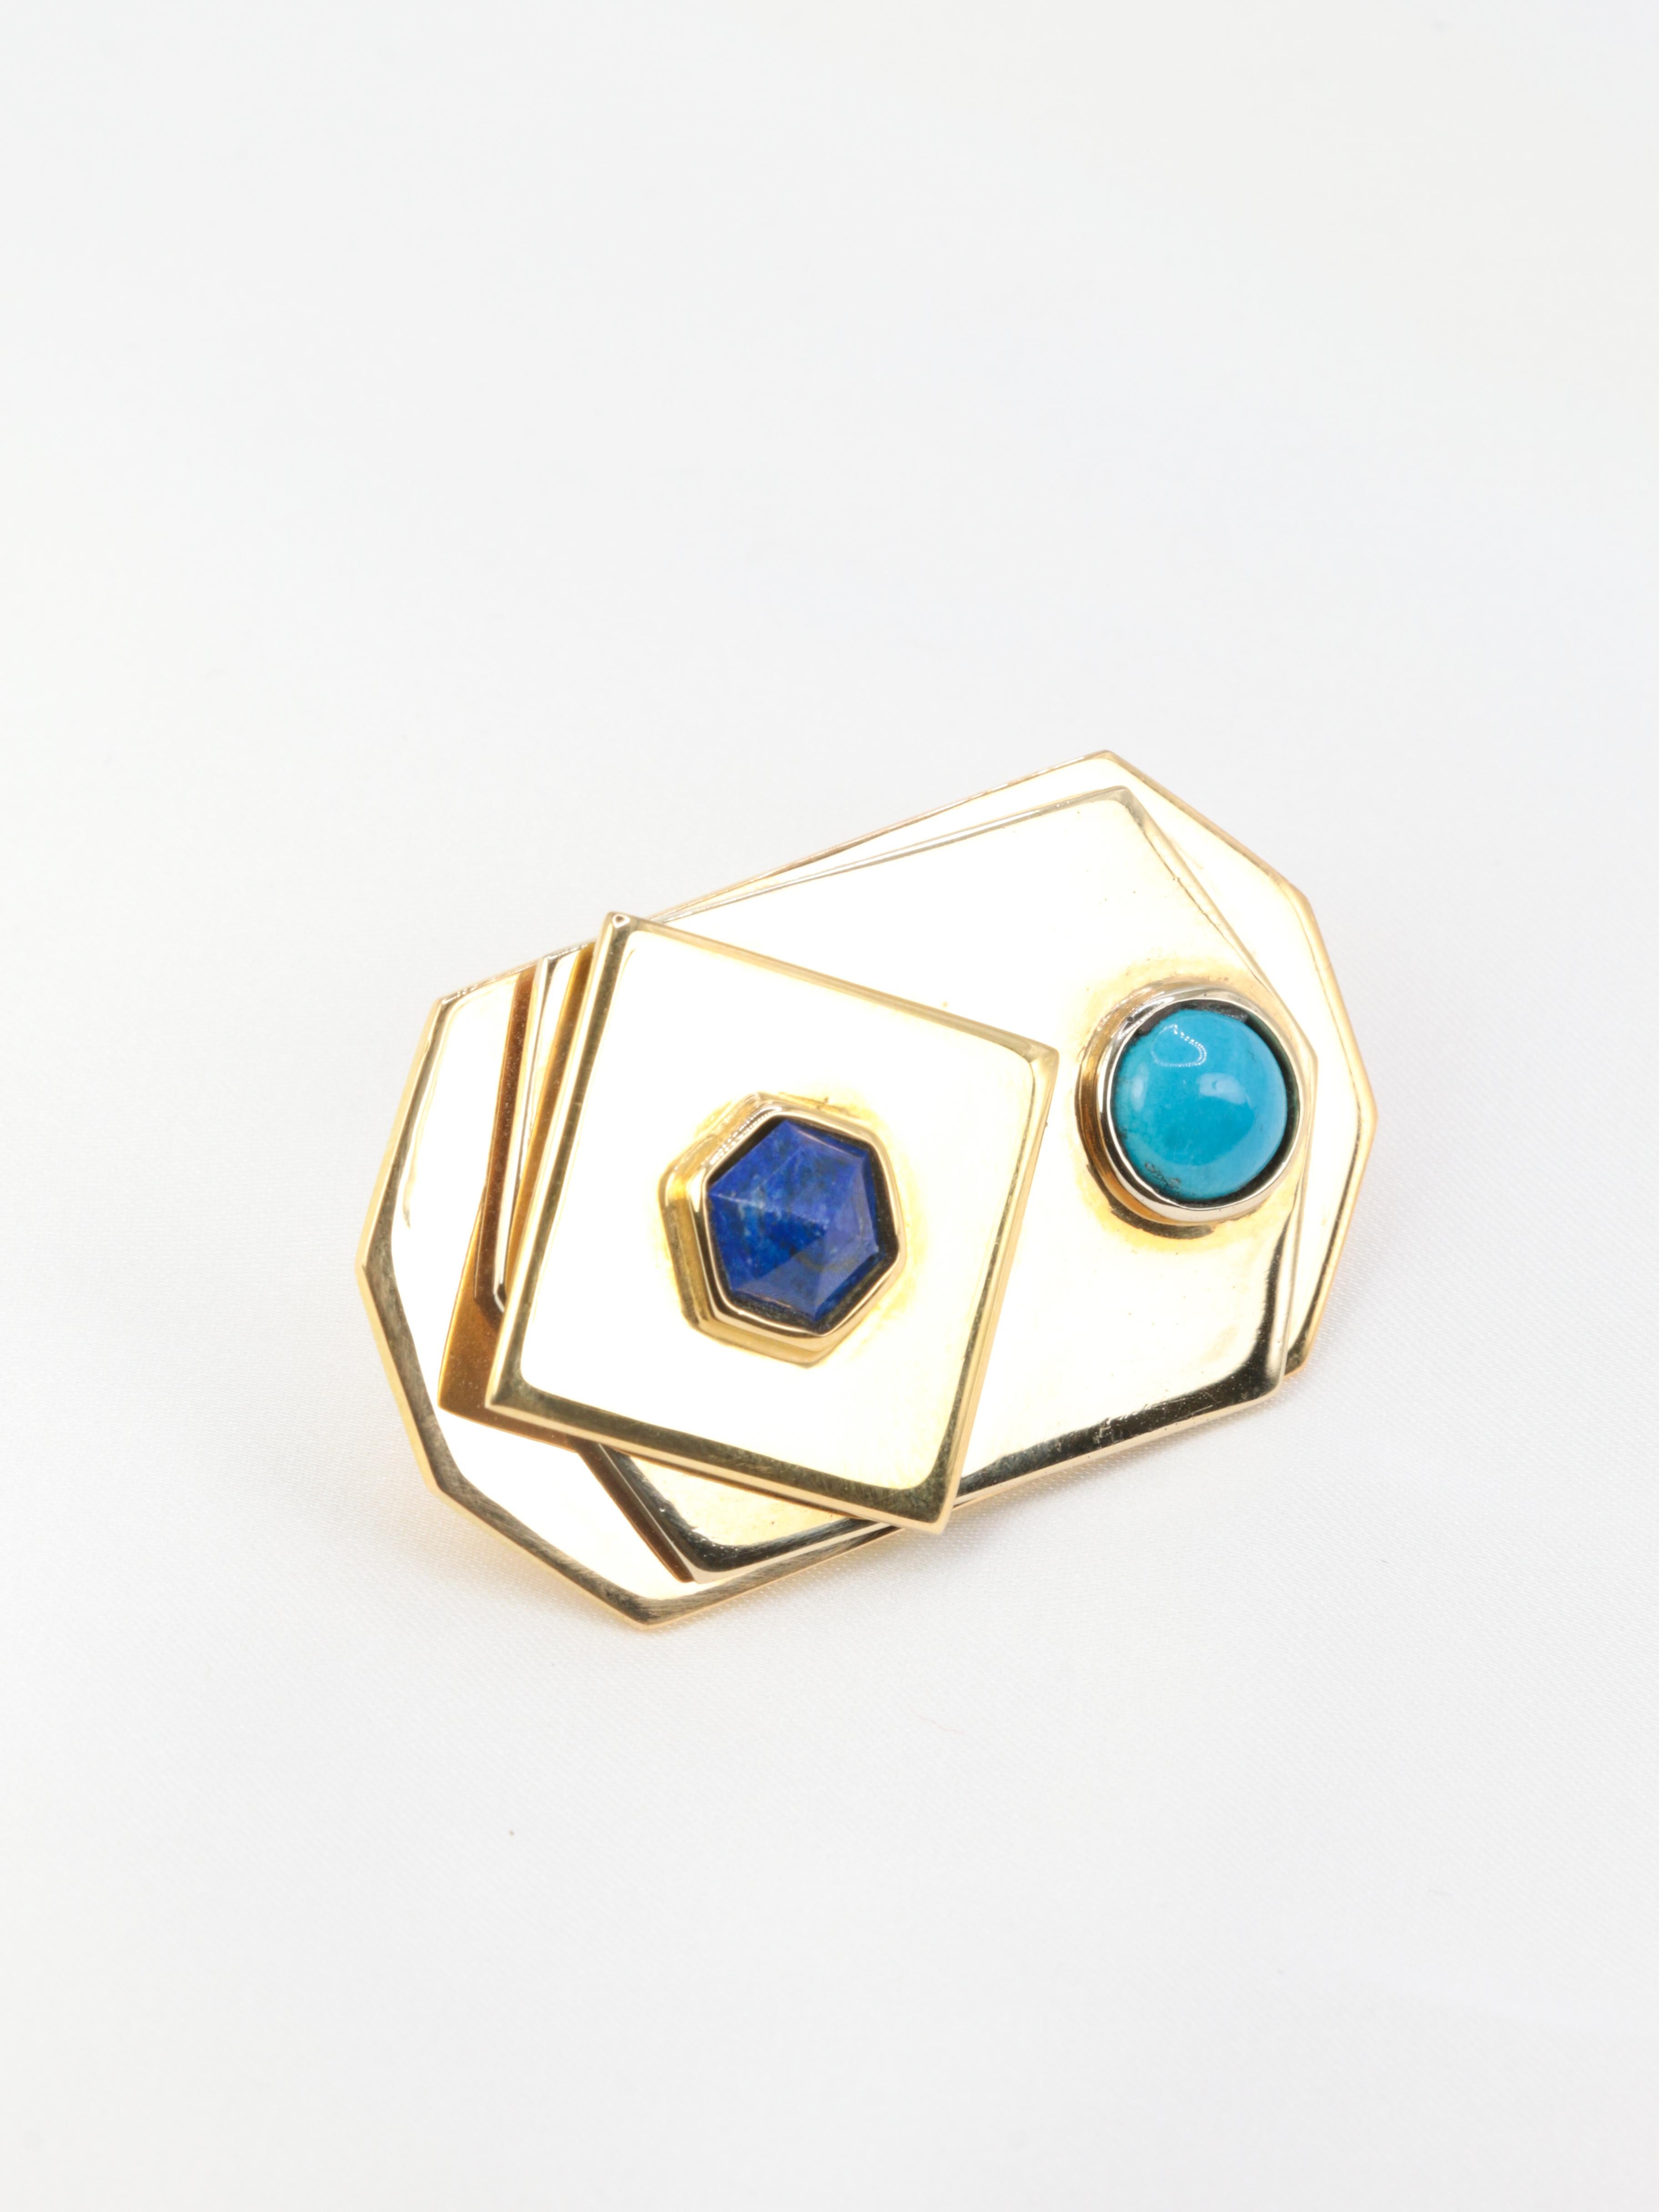 Piero Dorazio Vintage Brooch in Gold, Turquoise and Lapis Lazuli - Artcurial Edi For Sale 3